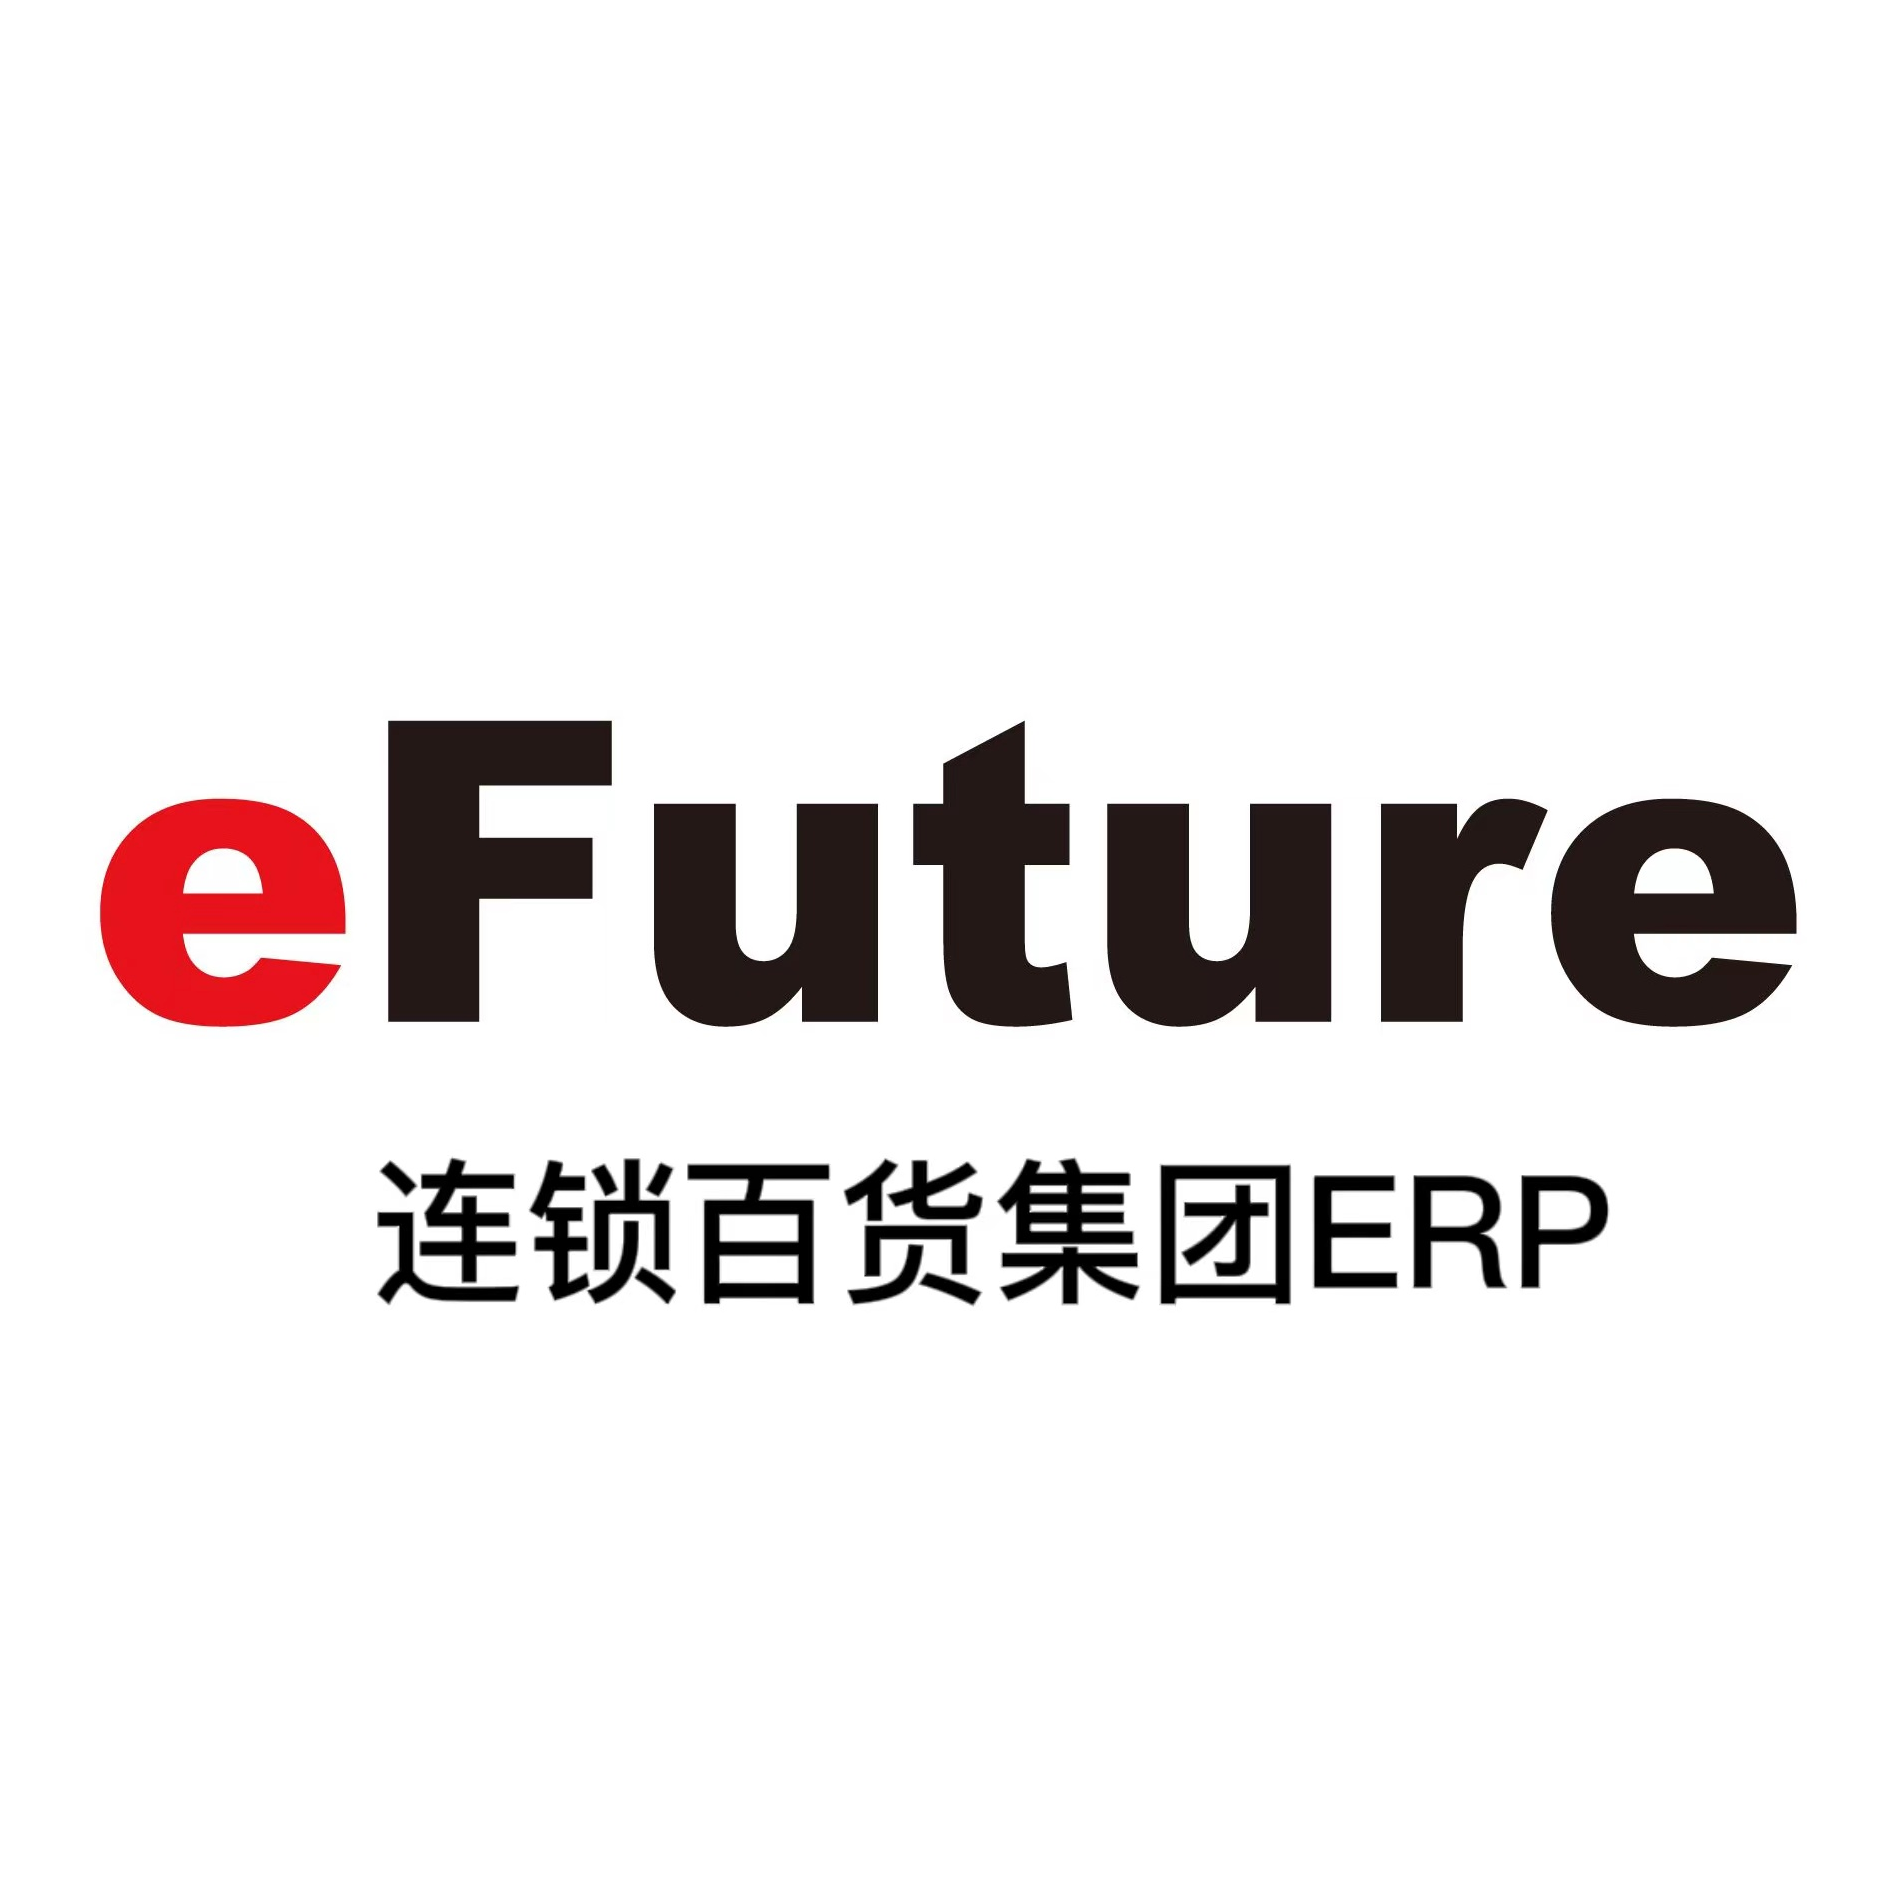 eFuture连锁百货集团ERP系统